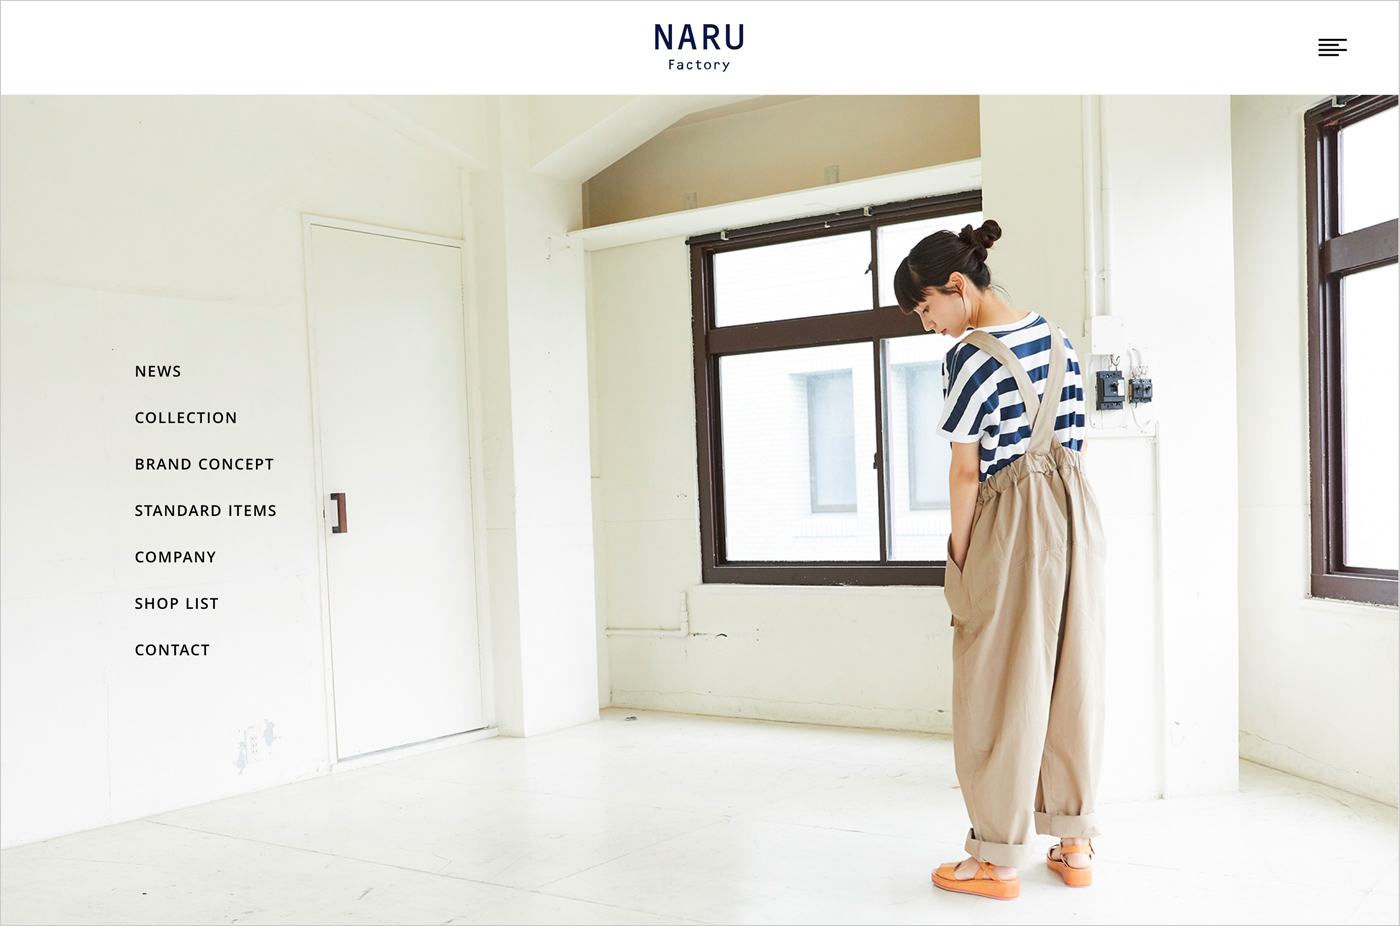 NARUウェブサイトの画面キャプチャ画像